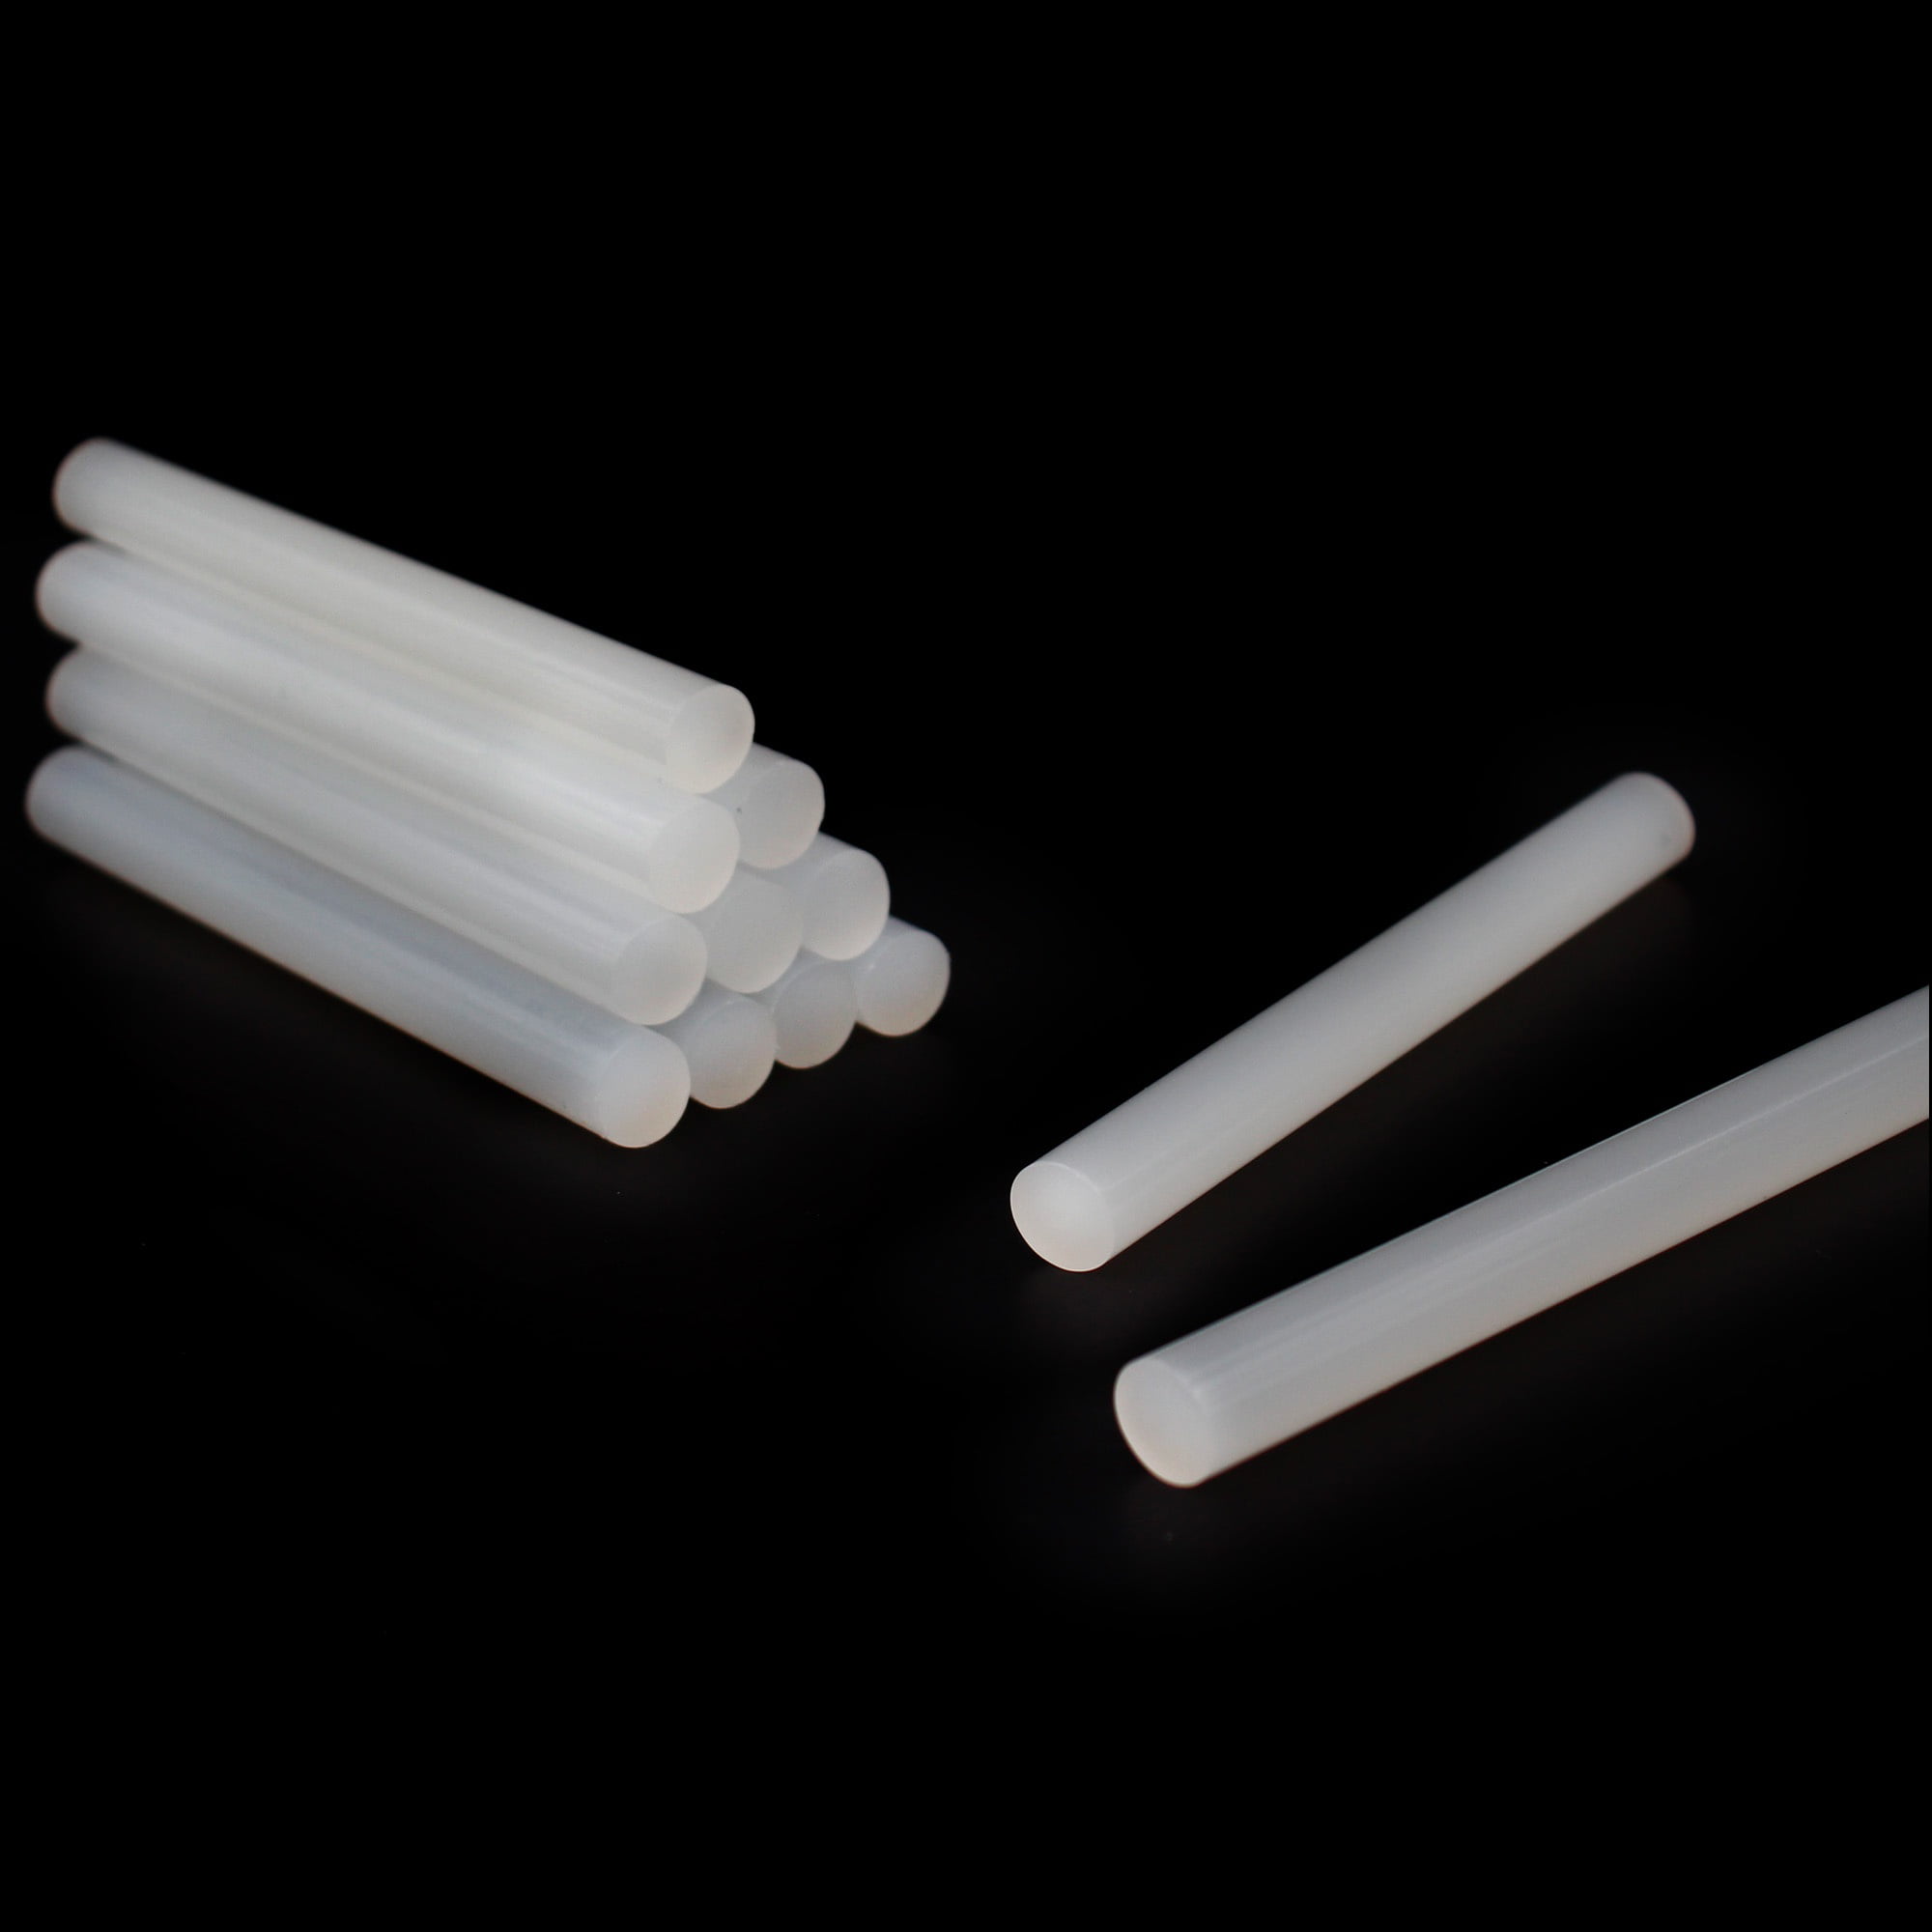 MtiolHig 20pcs 0.27'' Full Size Hot Glue Sticks for Hot Glue Gun  7.87''x0.43 White Large Hot Glue Sticks Bulk for DIY Craft Accessories  20pcs Glue Sticks